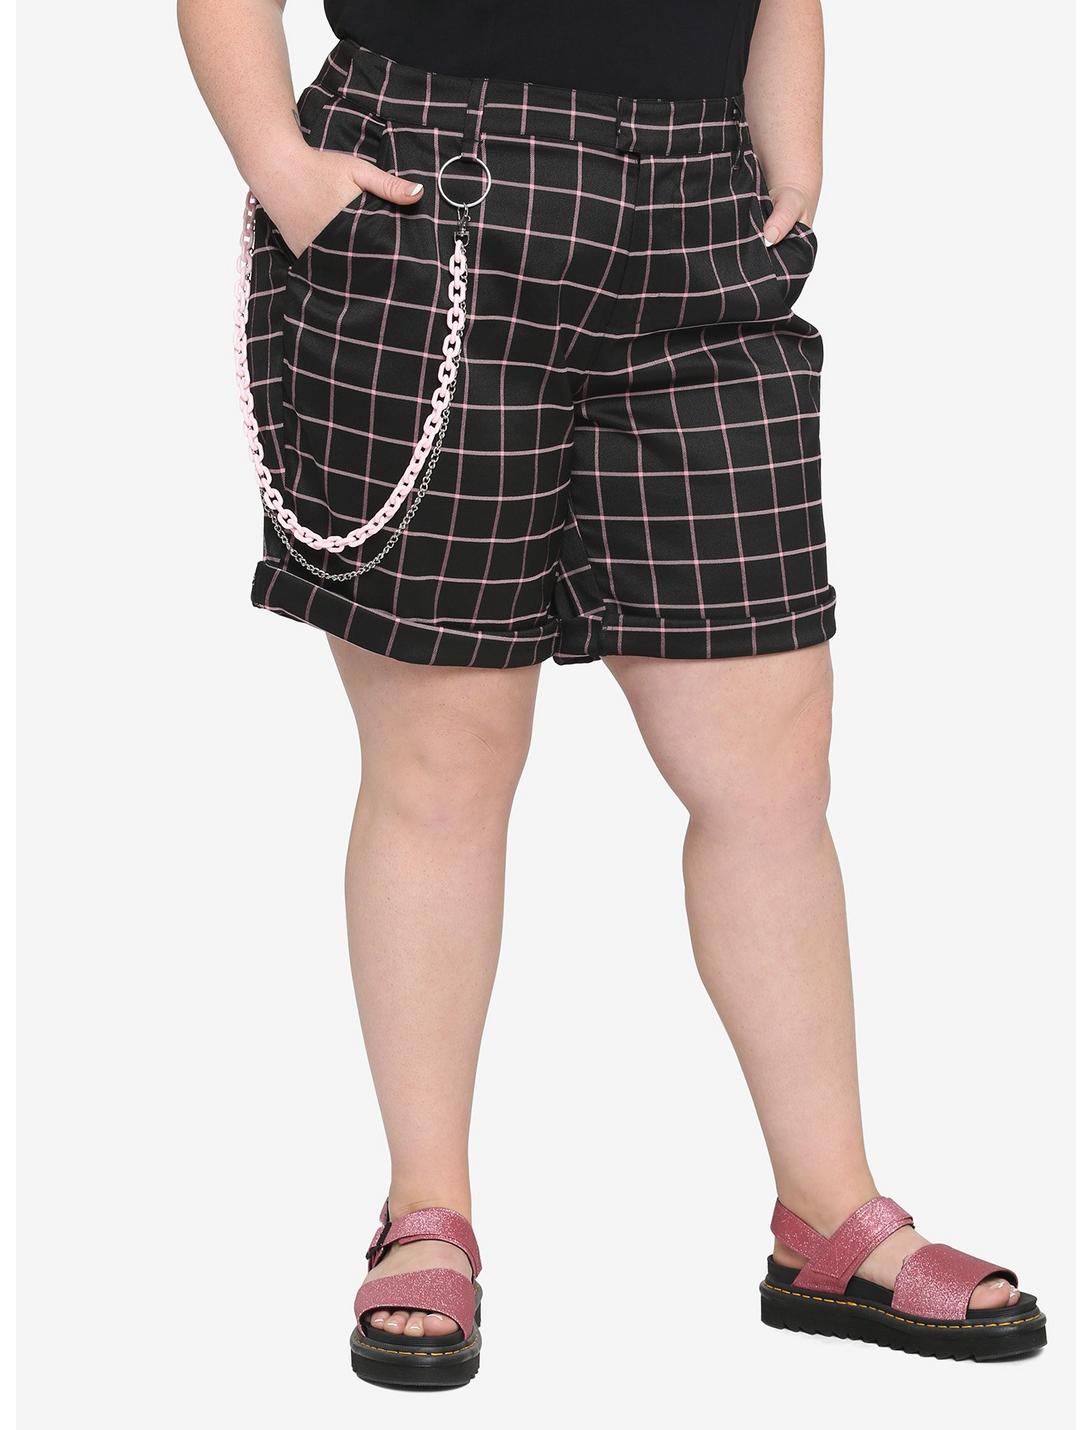 Pink & Black Grid Shorts Plus Size, BLACK, hi-res